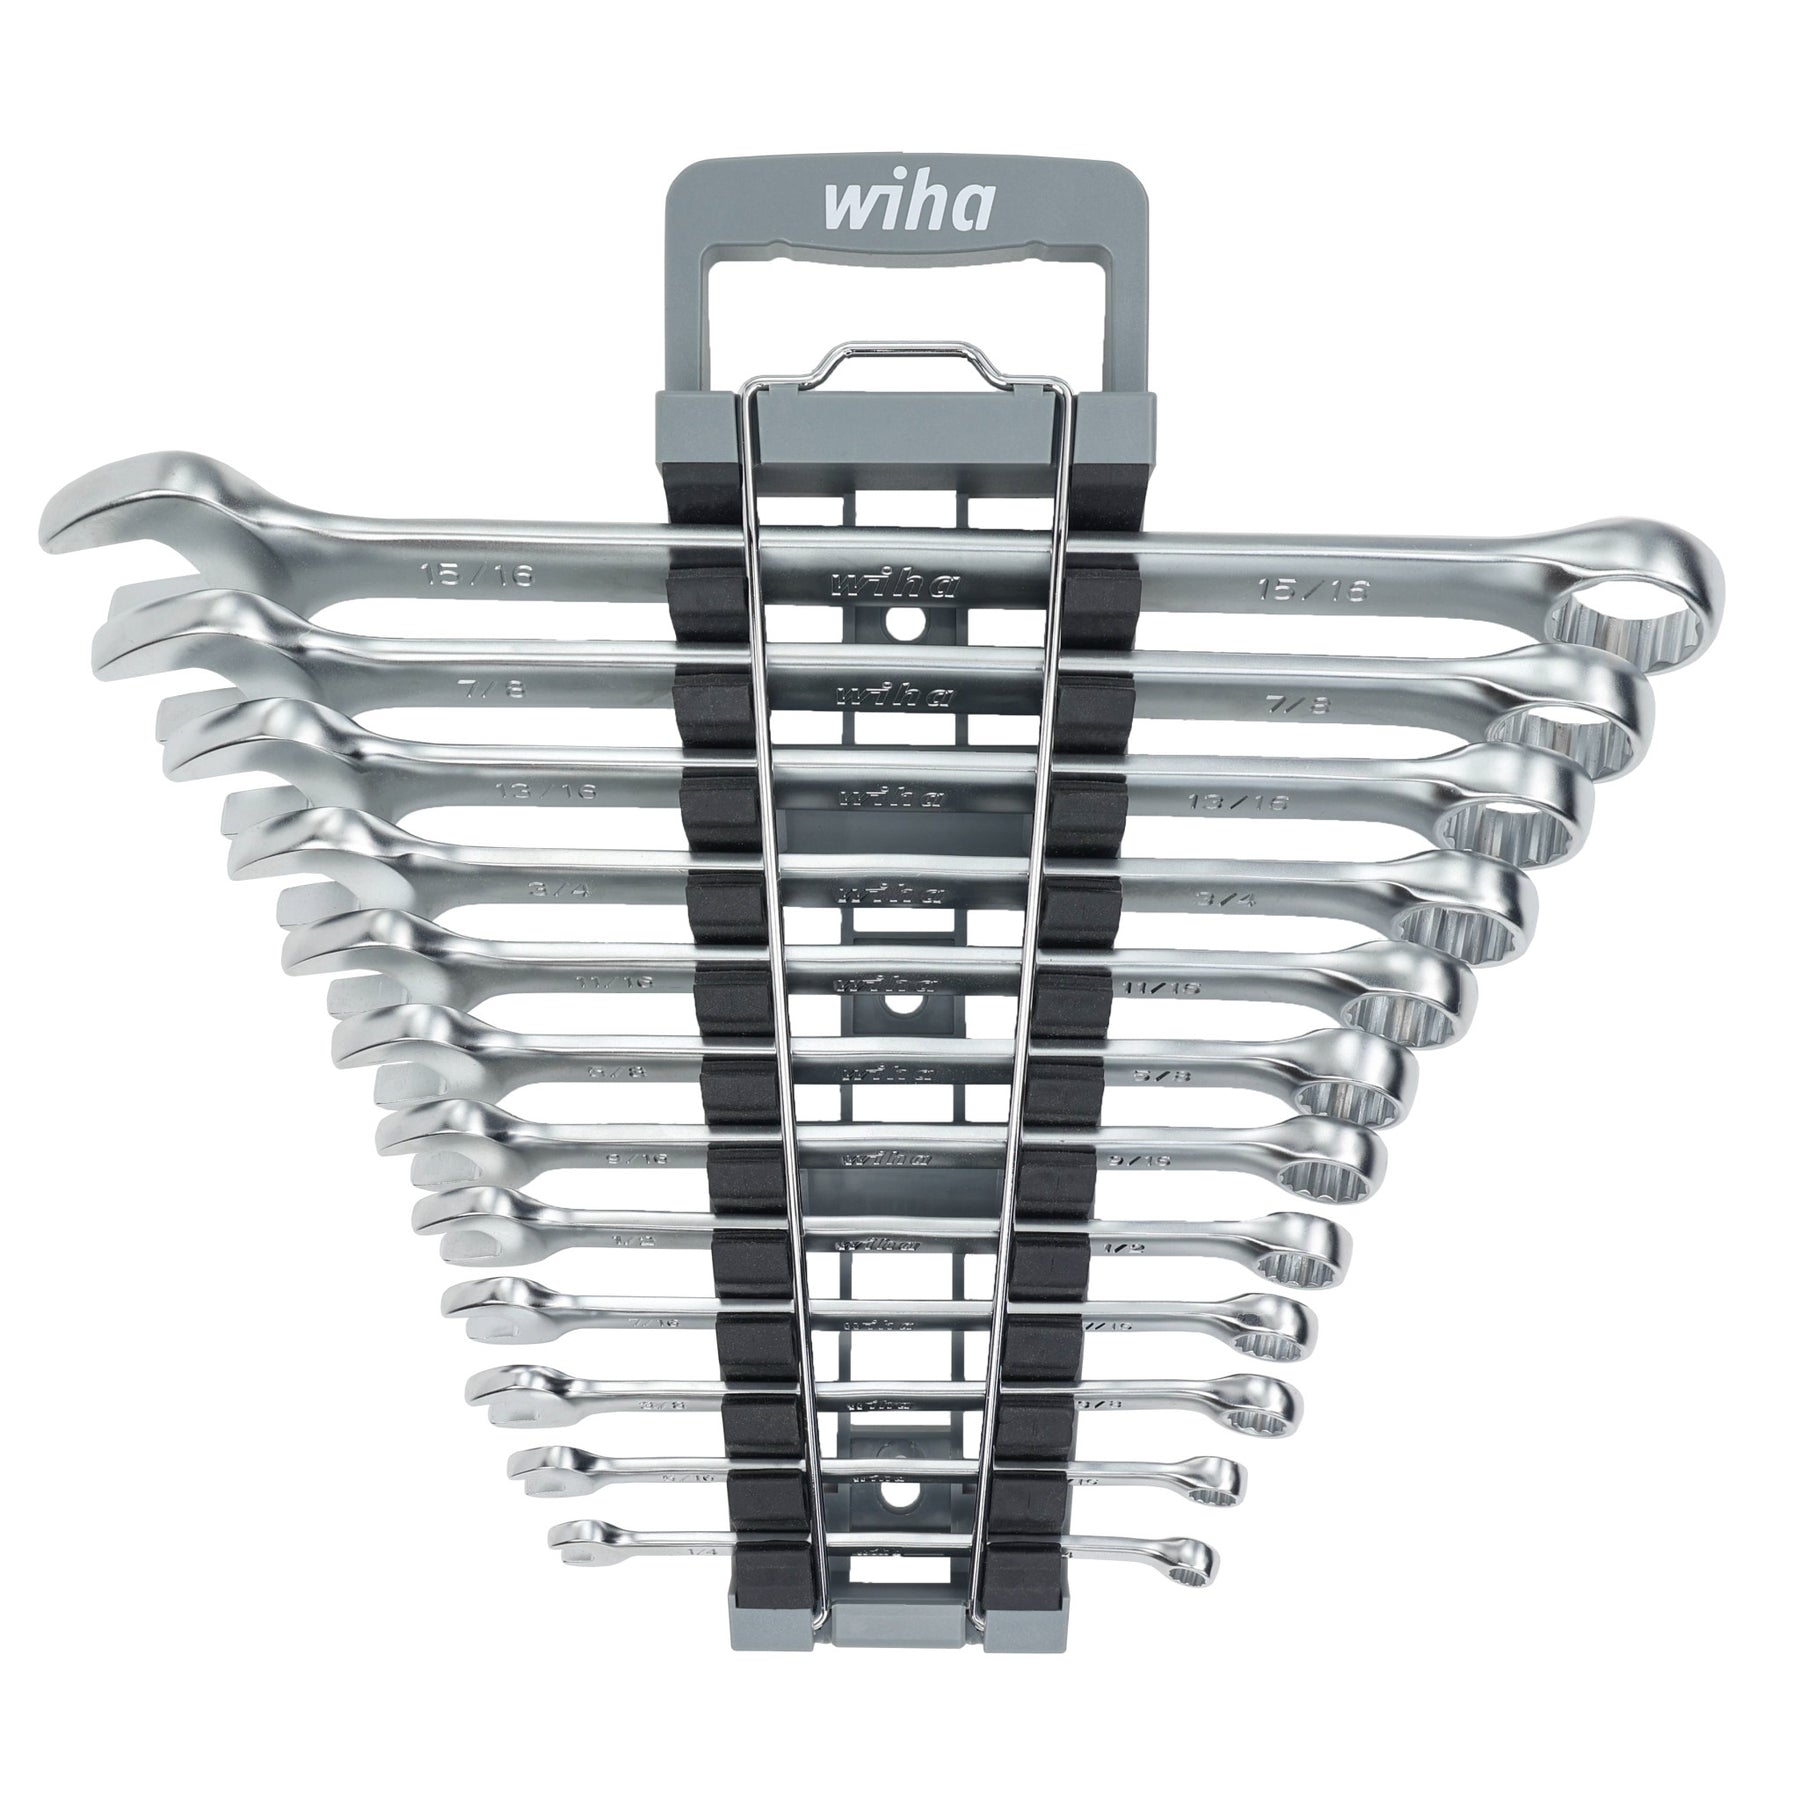 Wiha 30494 12 Piece Combination Wrench Set - SAE